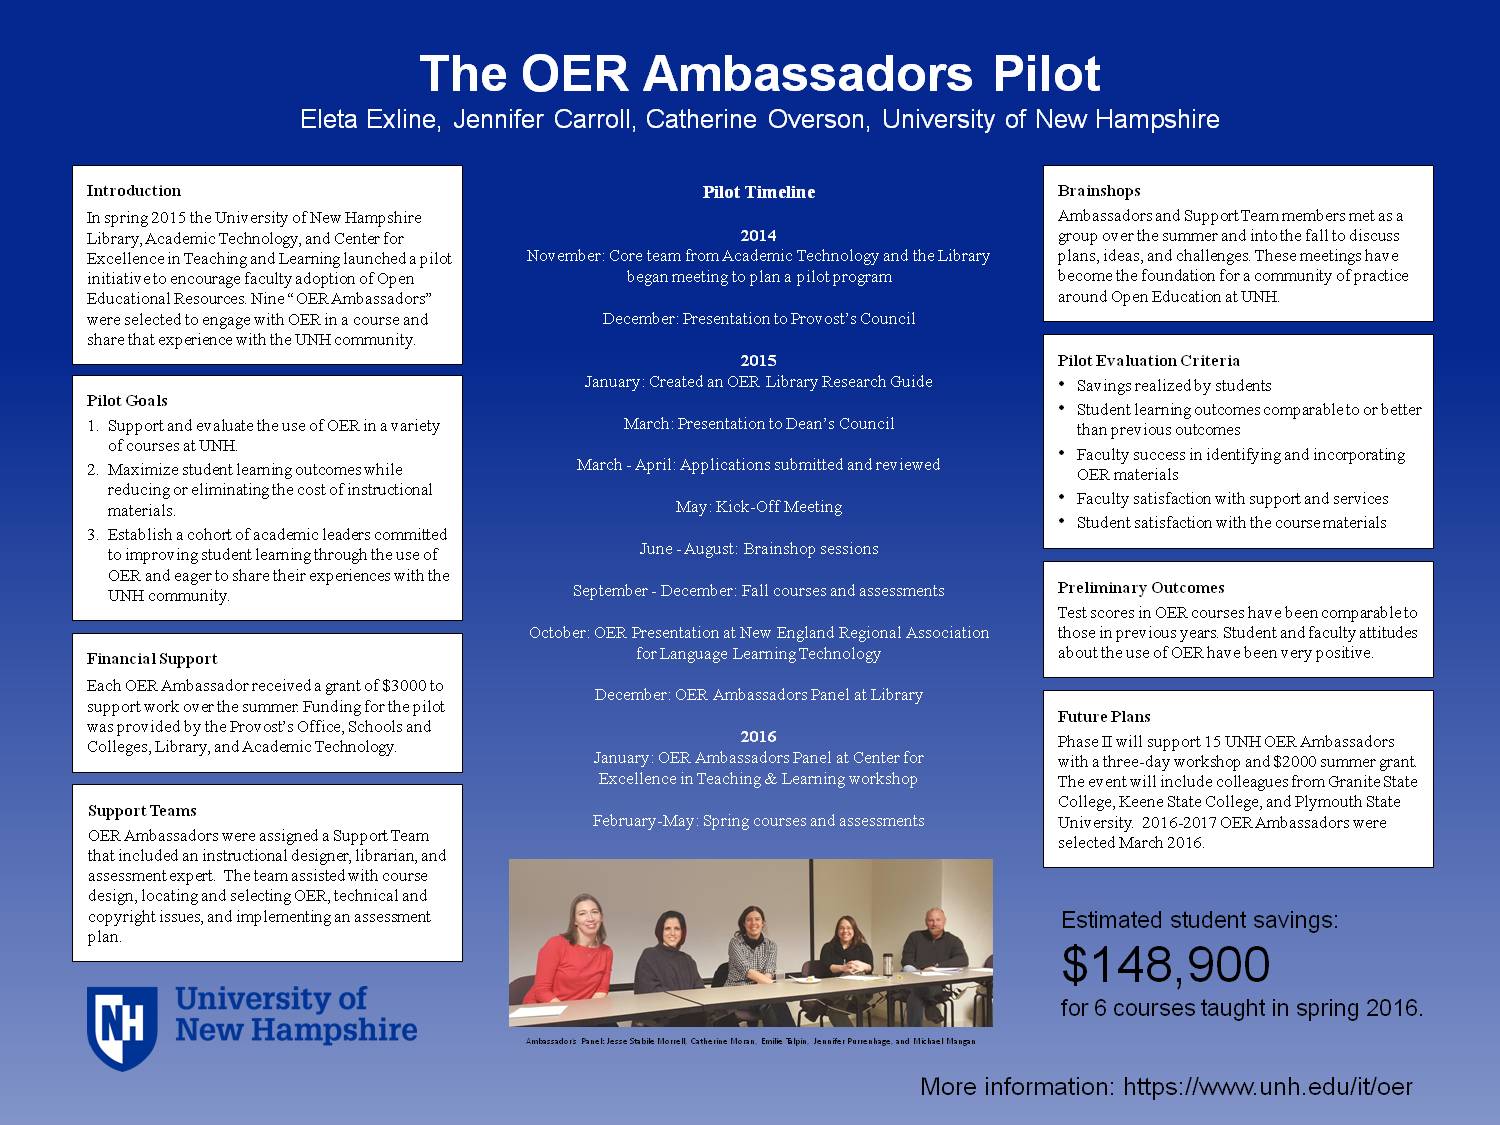 The Oer Ambassadors Pilot by eleta